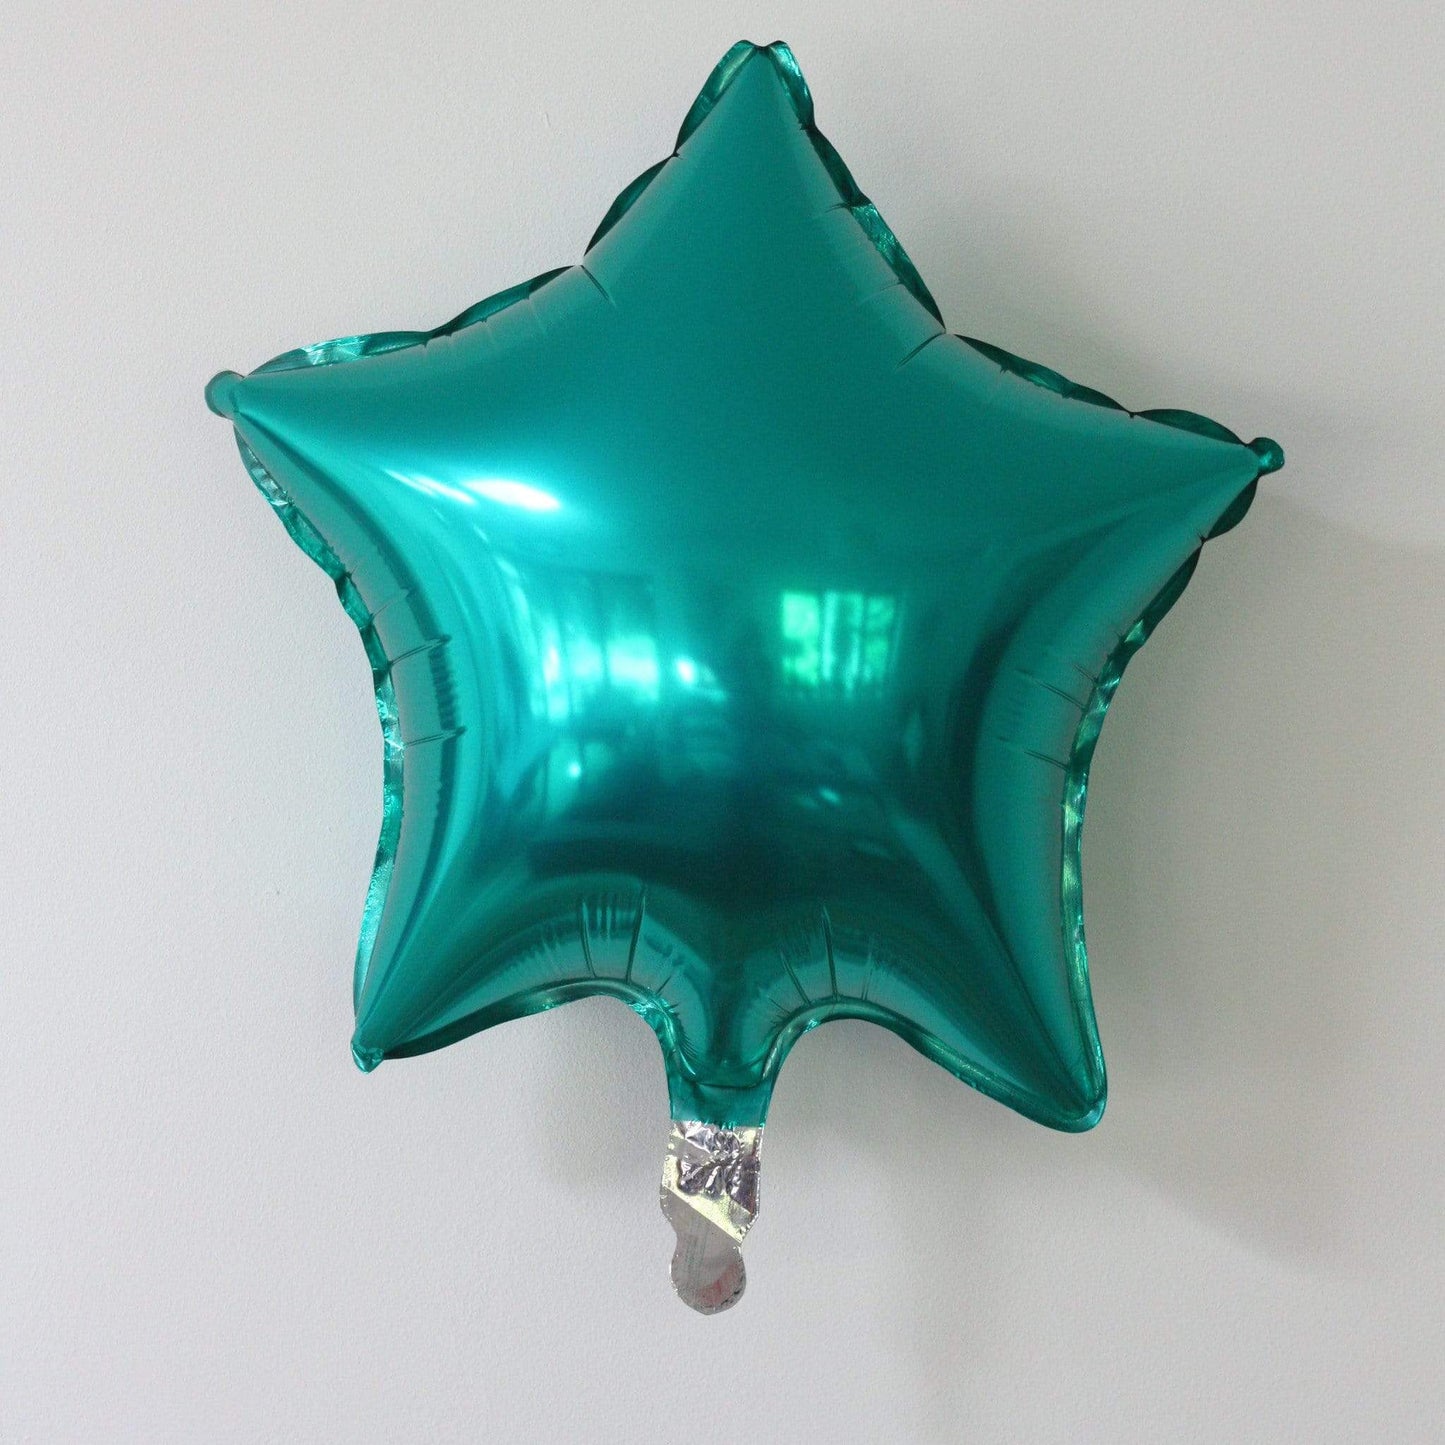 Teal Star Foil Balloons | Helium Balloons | Online Balloonery Qualatex